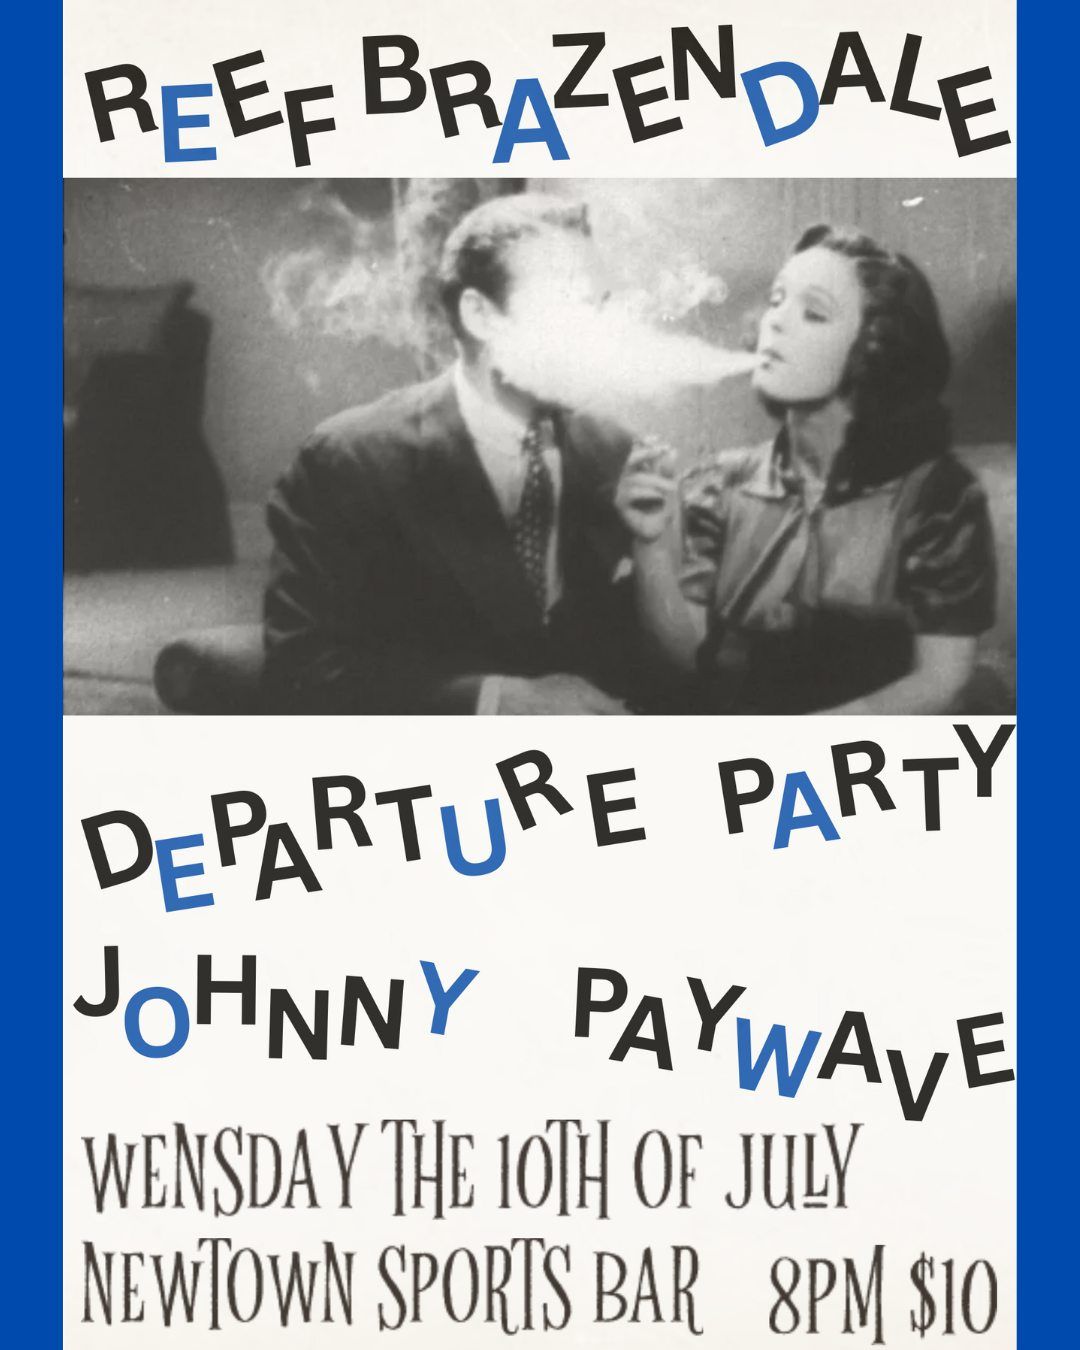 Reef Brazendale, Departure Party, Johnny Paywave